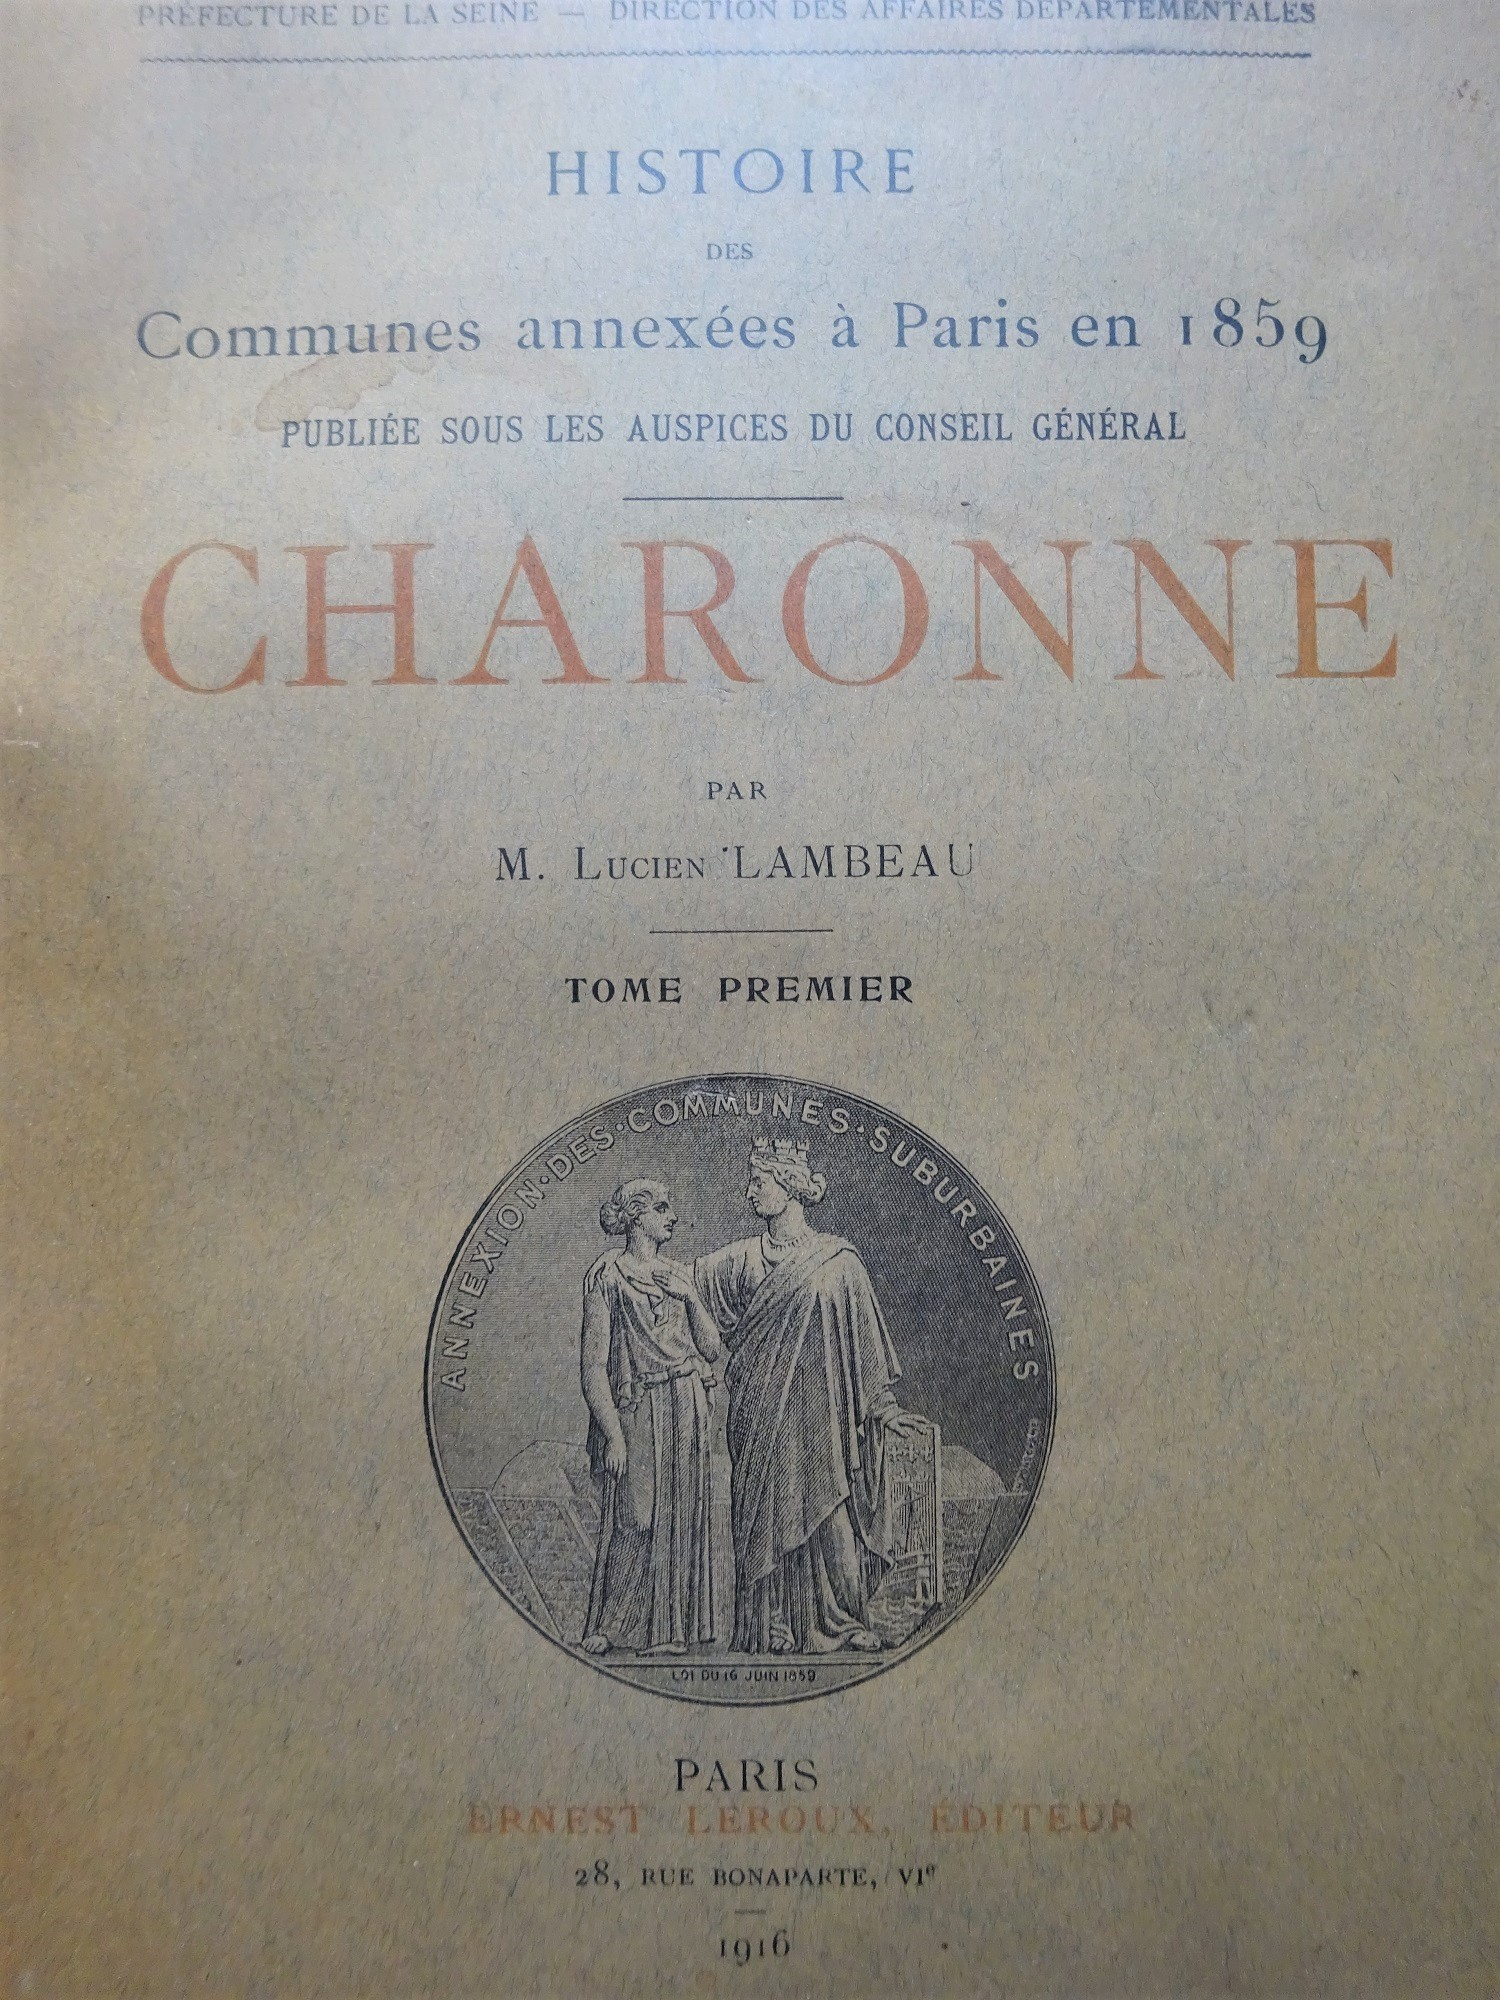 Charonne Volume I